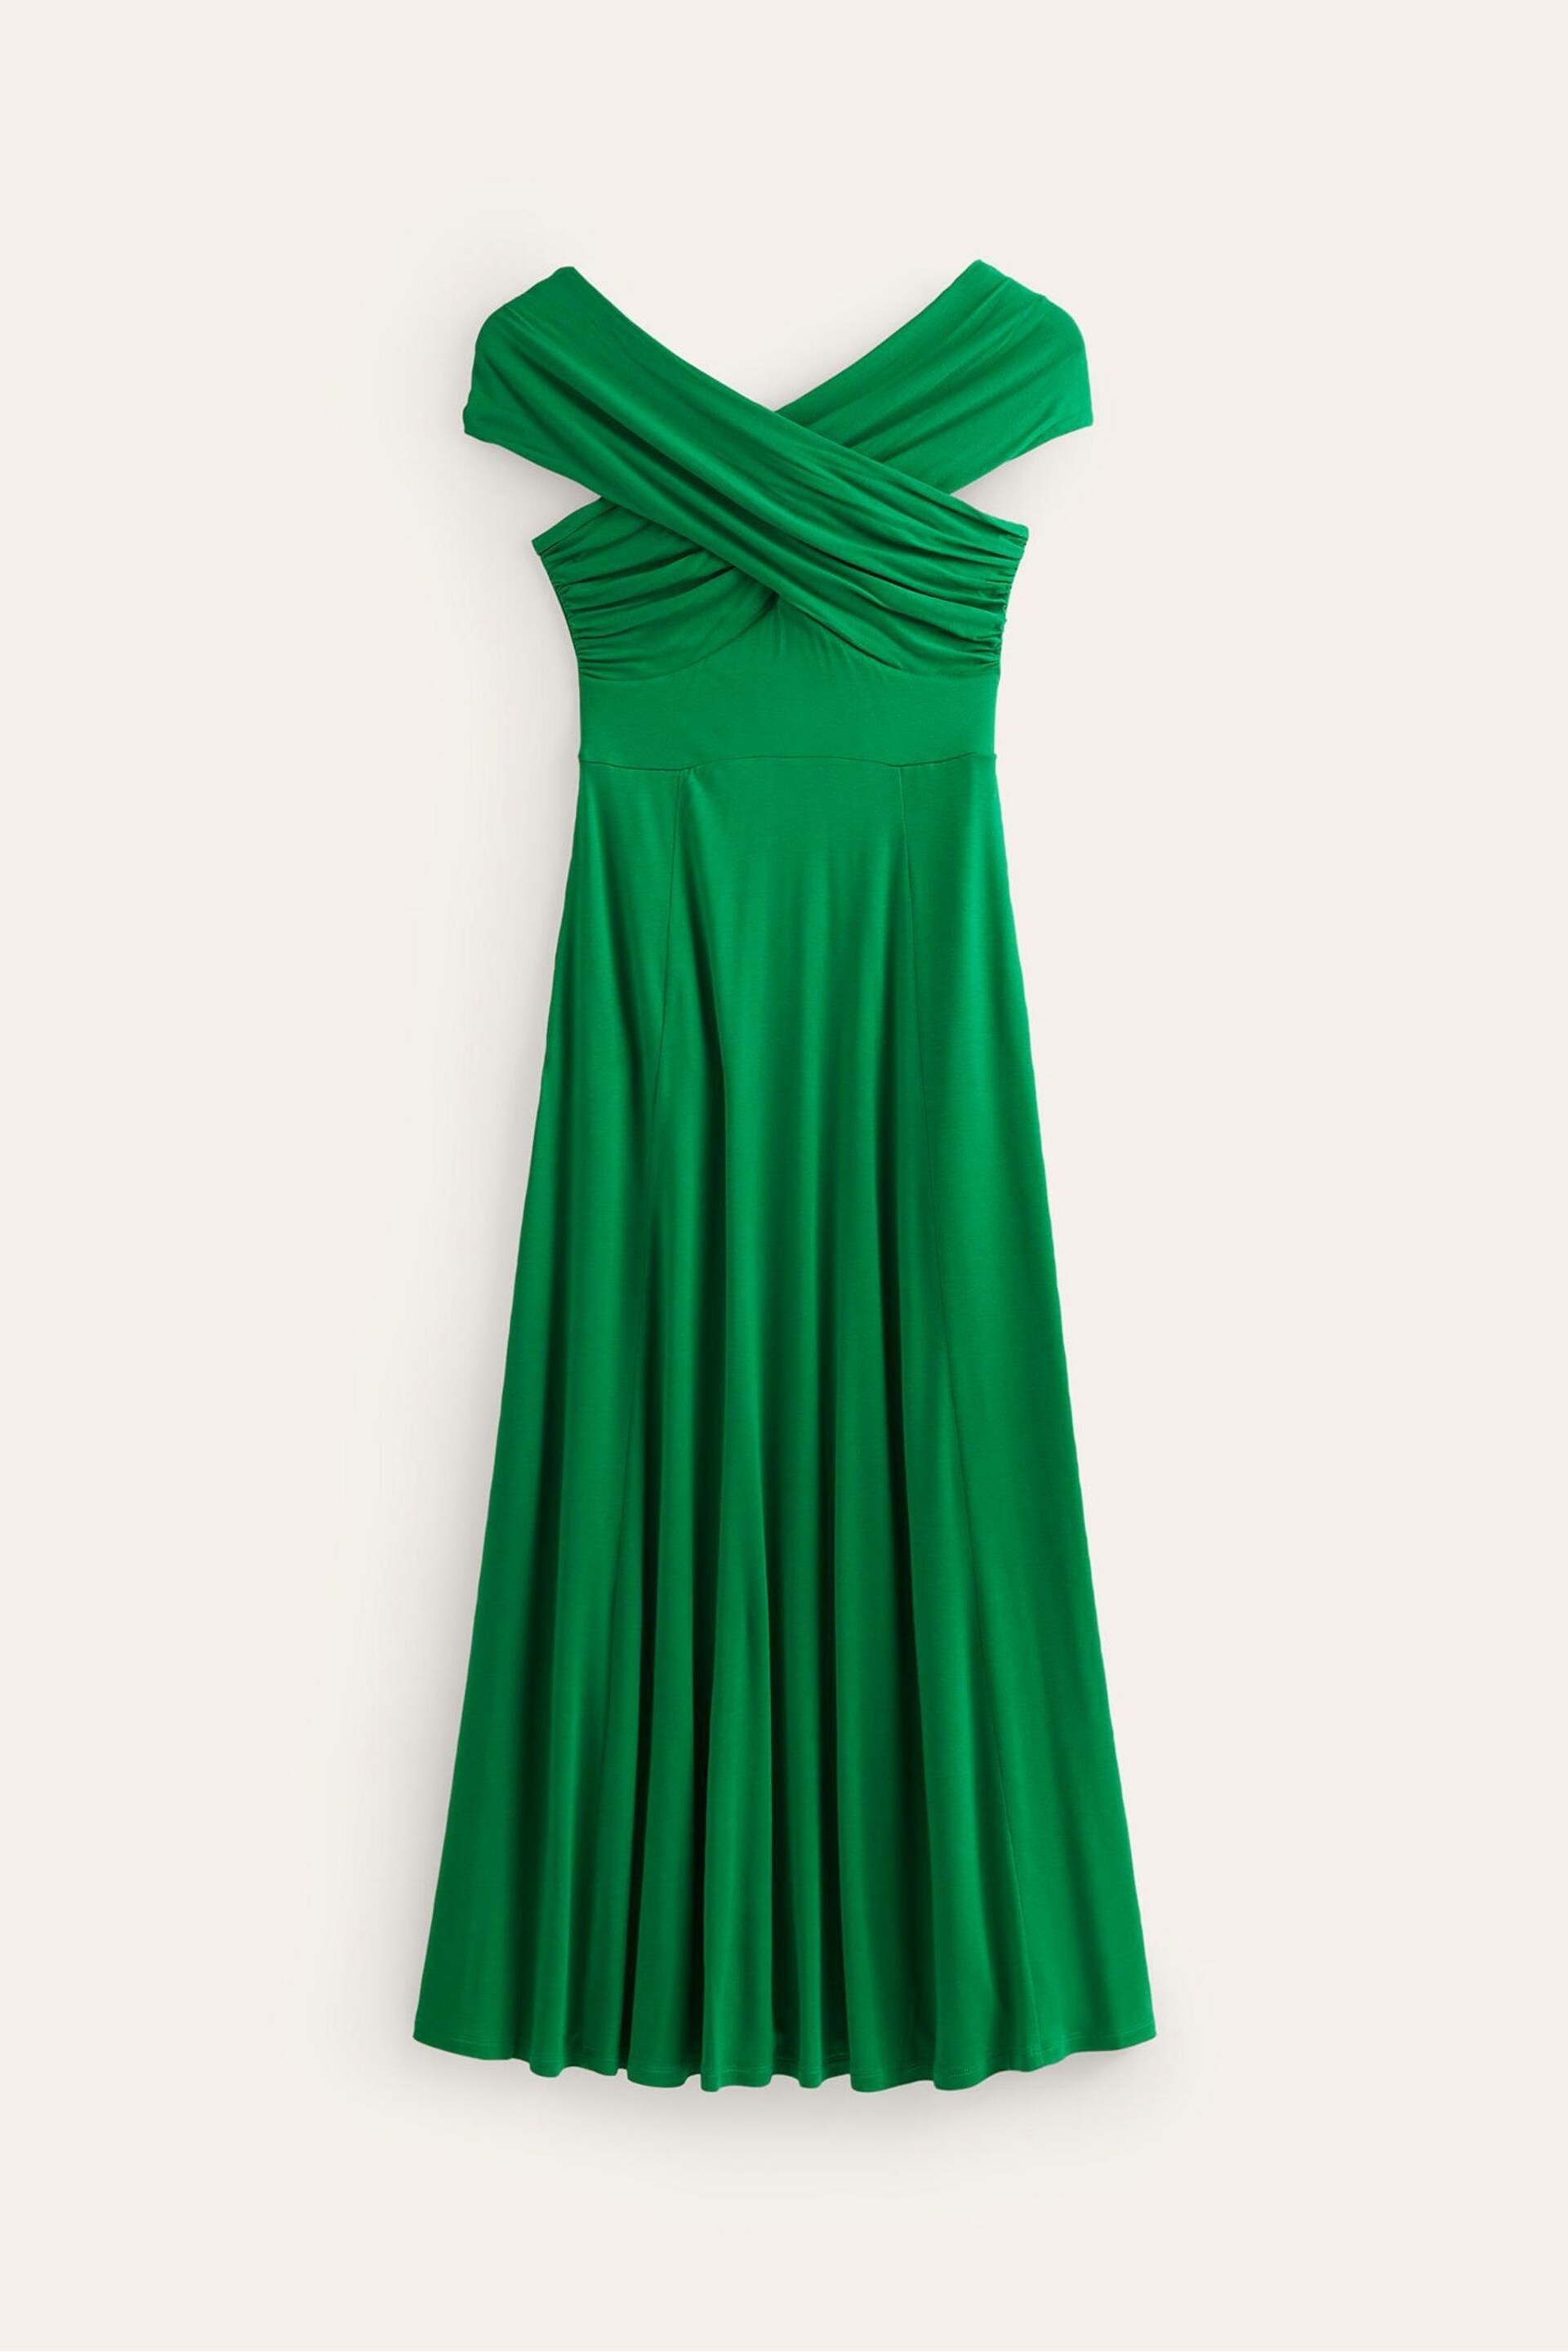 Boden Green Bardot Jersey Maxi Dress - Image 5 of 5